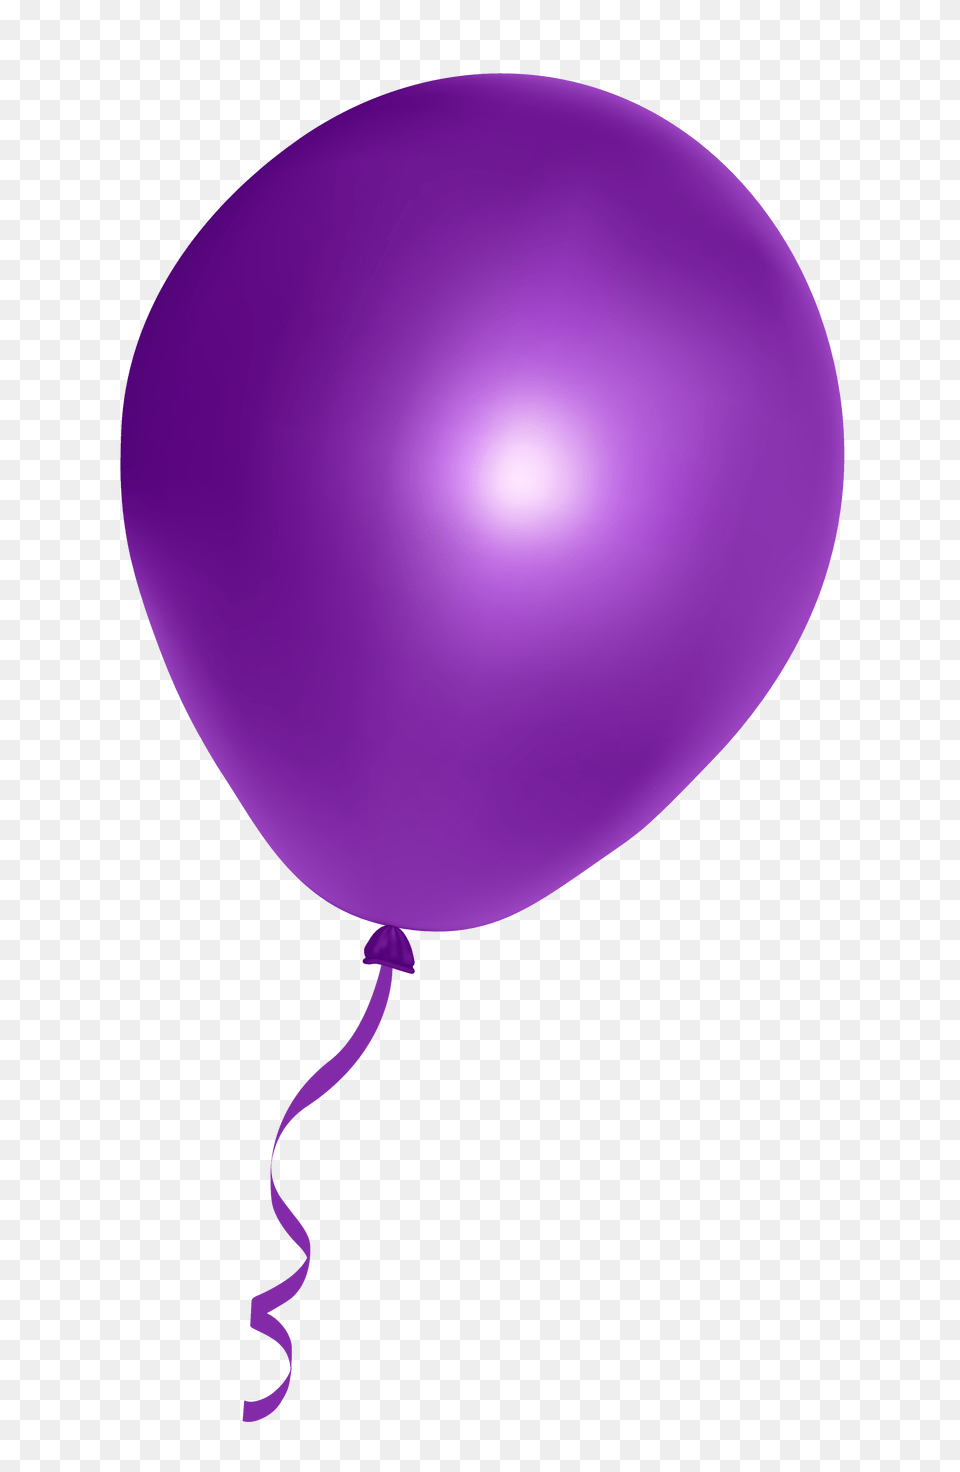 Pngpix Com Purple Balloon Image Free Png